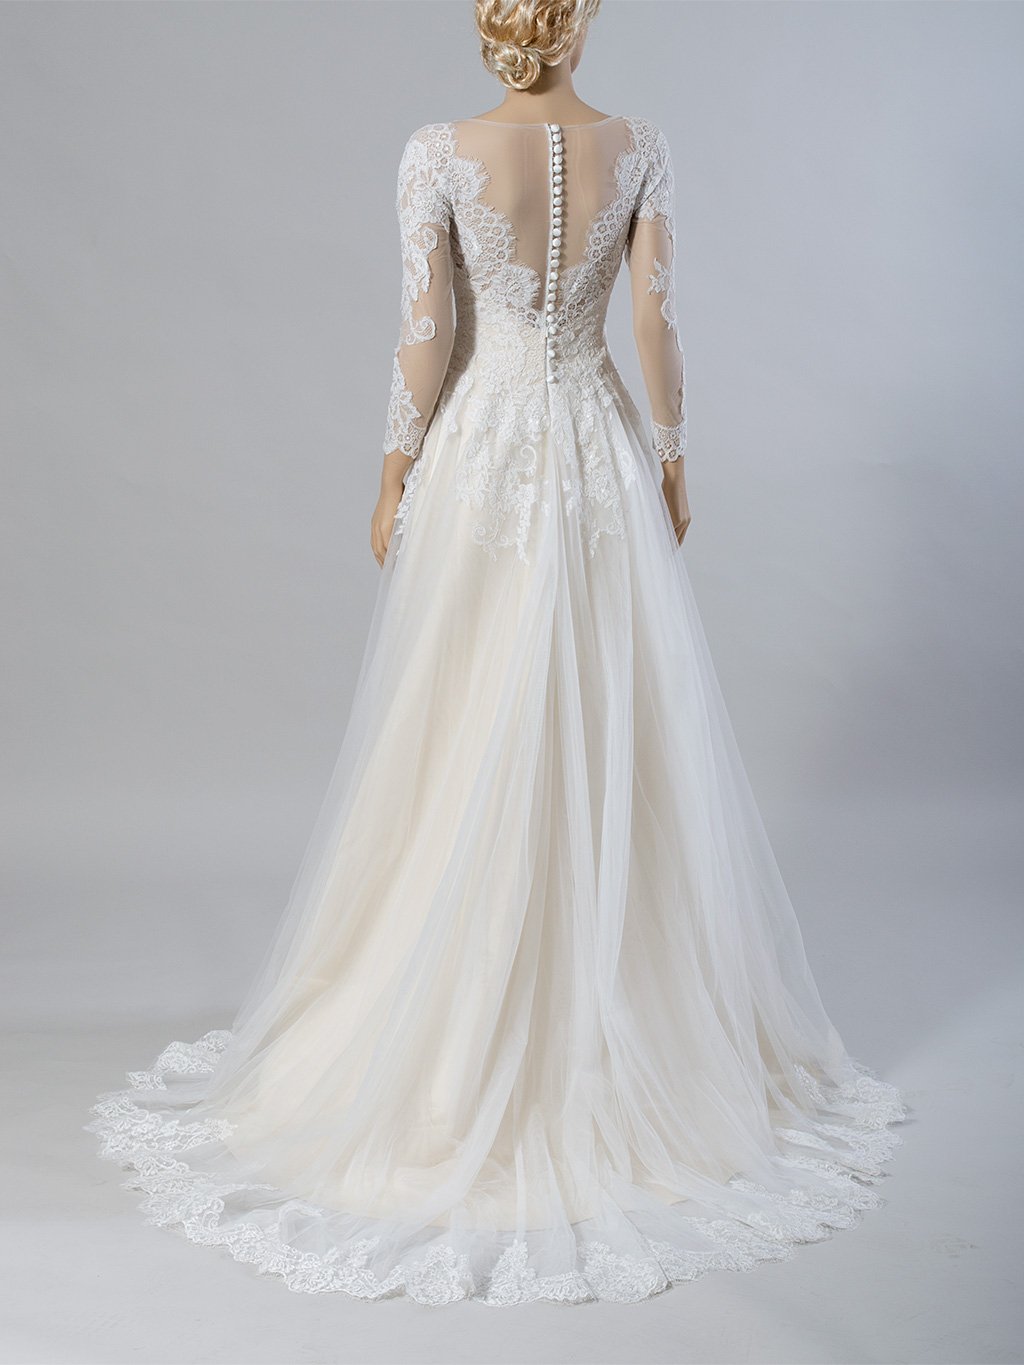 Long sleeve lace wedding dress with alencon lace 4031-weddin